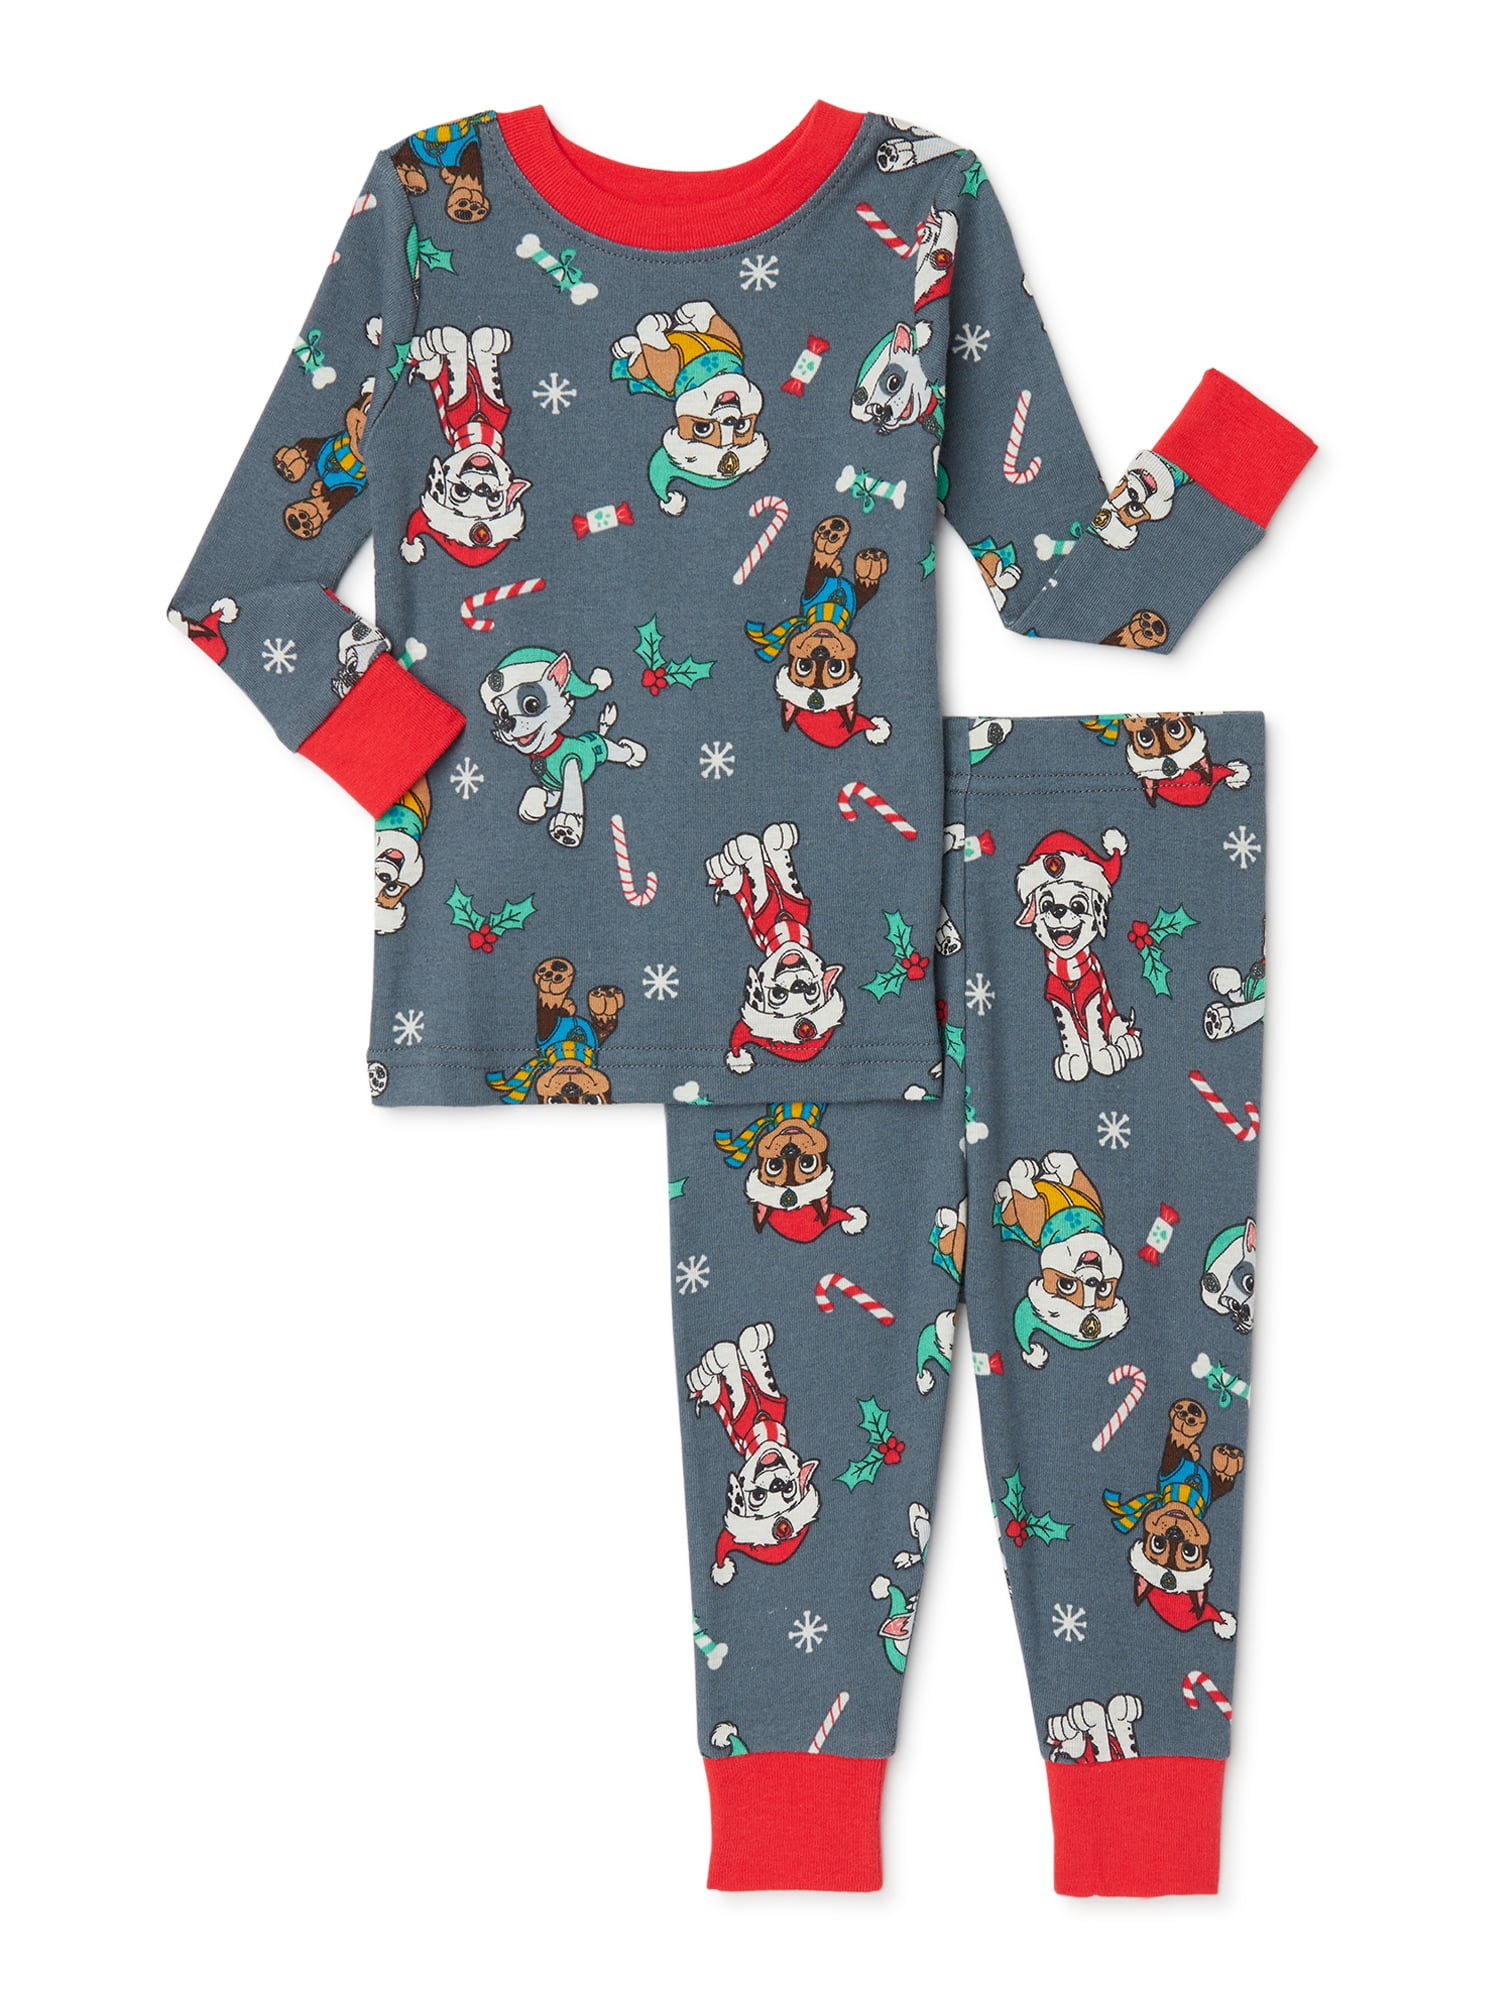 PAW Patrol Toddler Character Pajamas, 2-Piece, Sizes 12M-5T